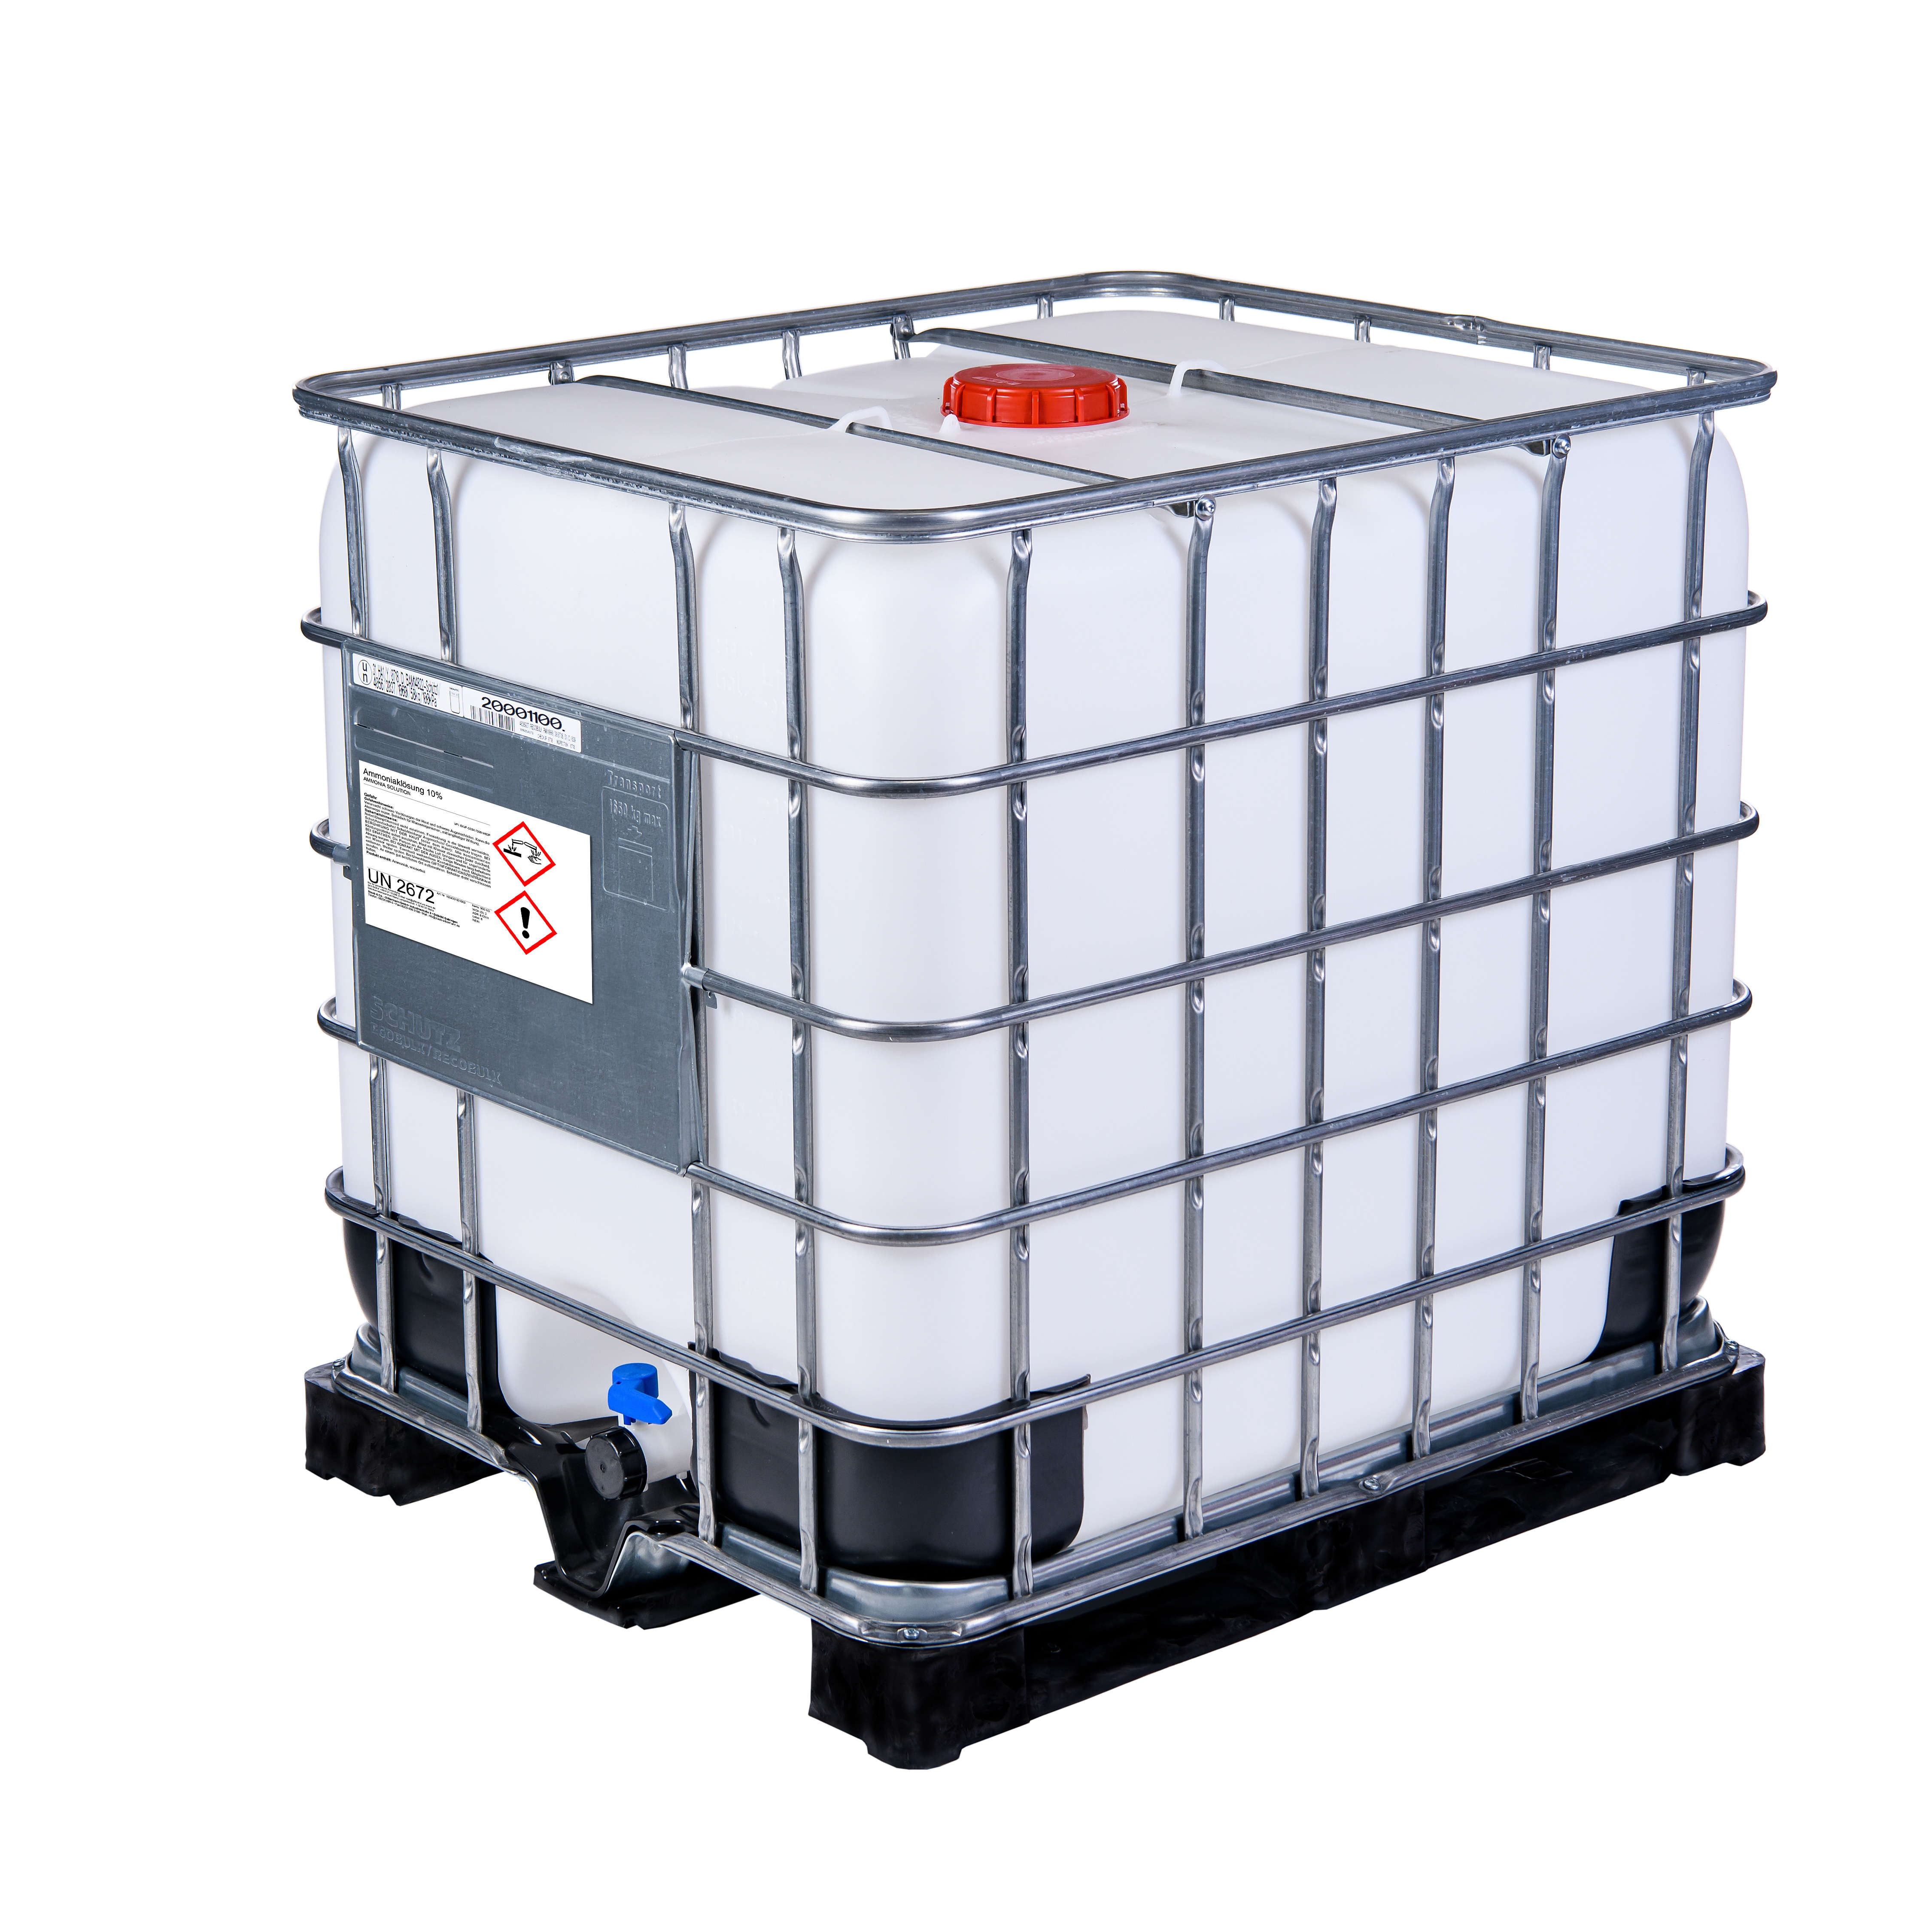 Ammoniaklösung 10 im Container